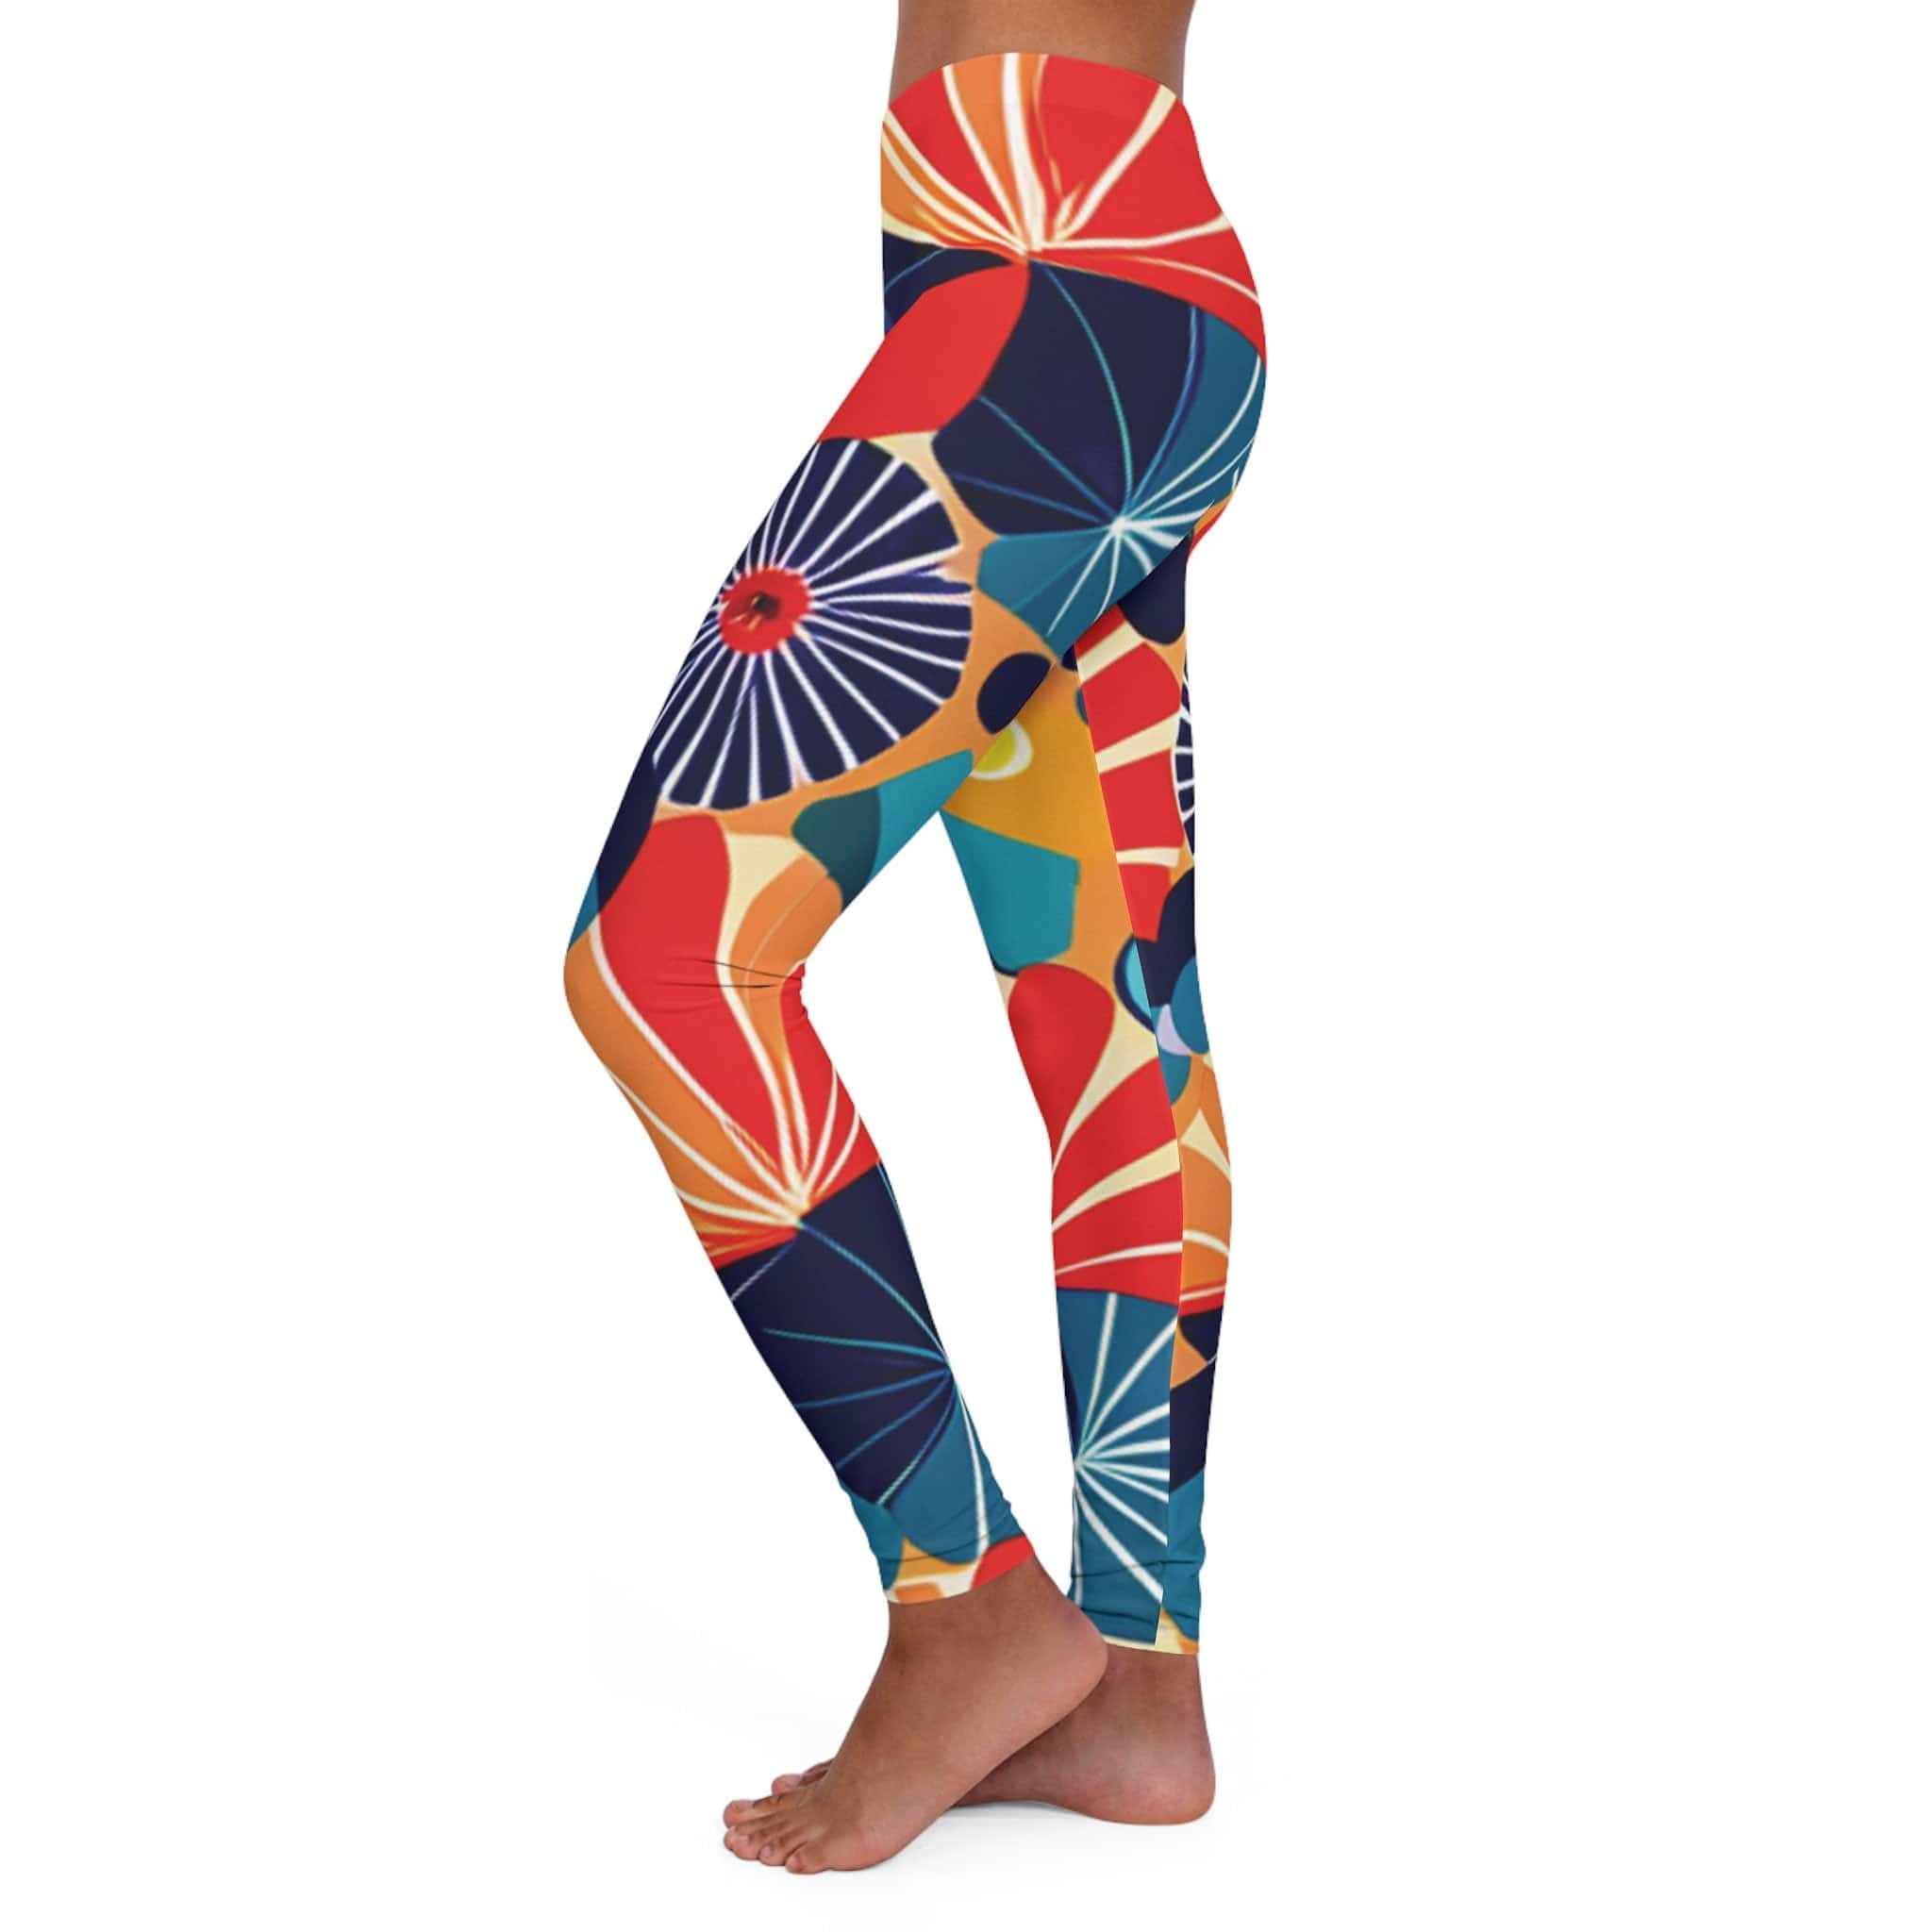 Kate McEnroe New York Retro Geometric Pattern Leggings - Stretchy Skinny Fit with Bold Mid - Century ColorsLeggings25067179675775556342